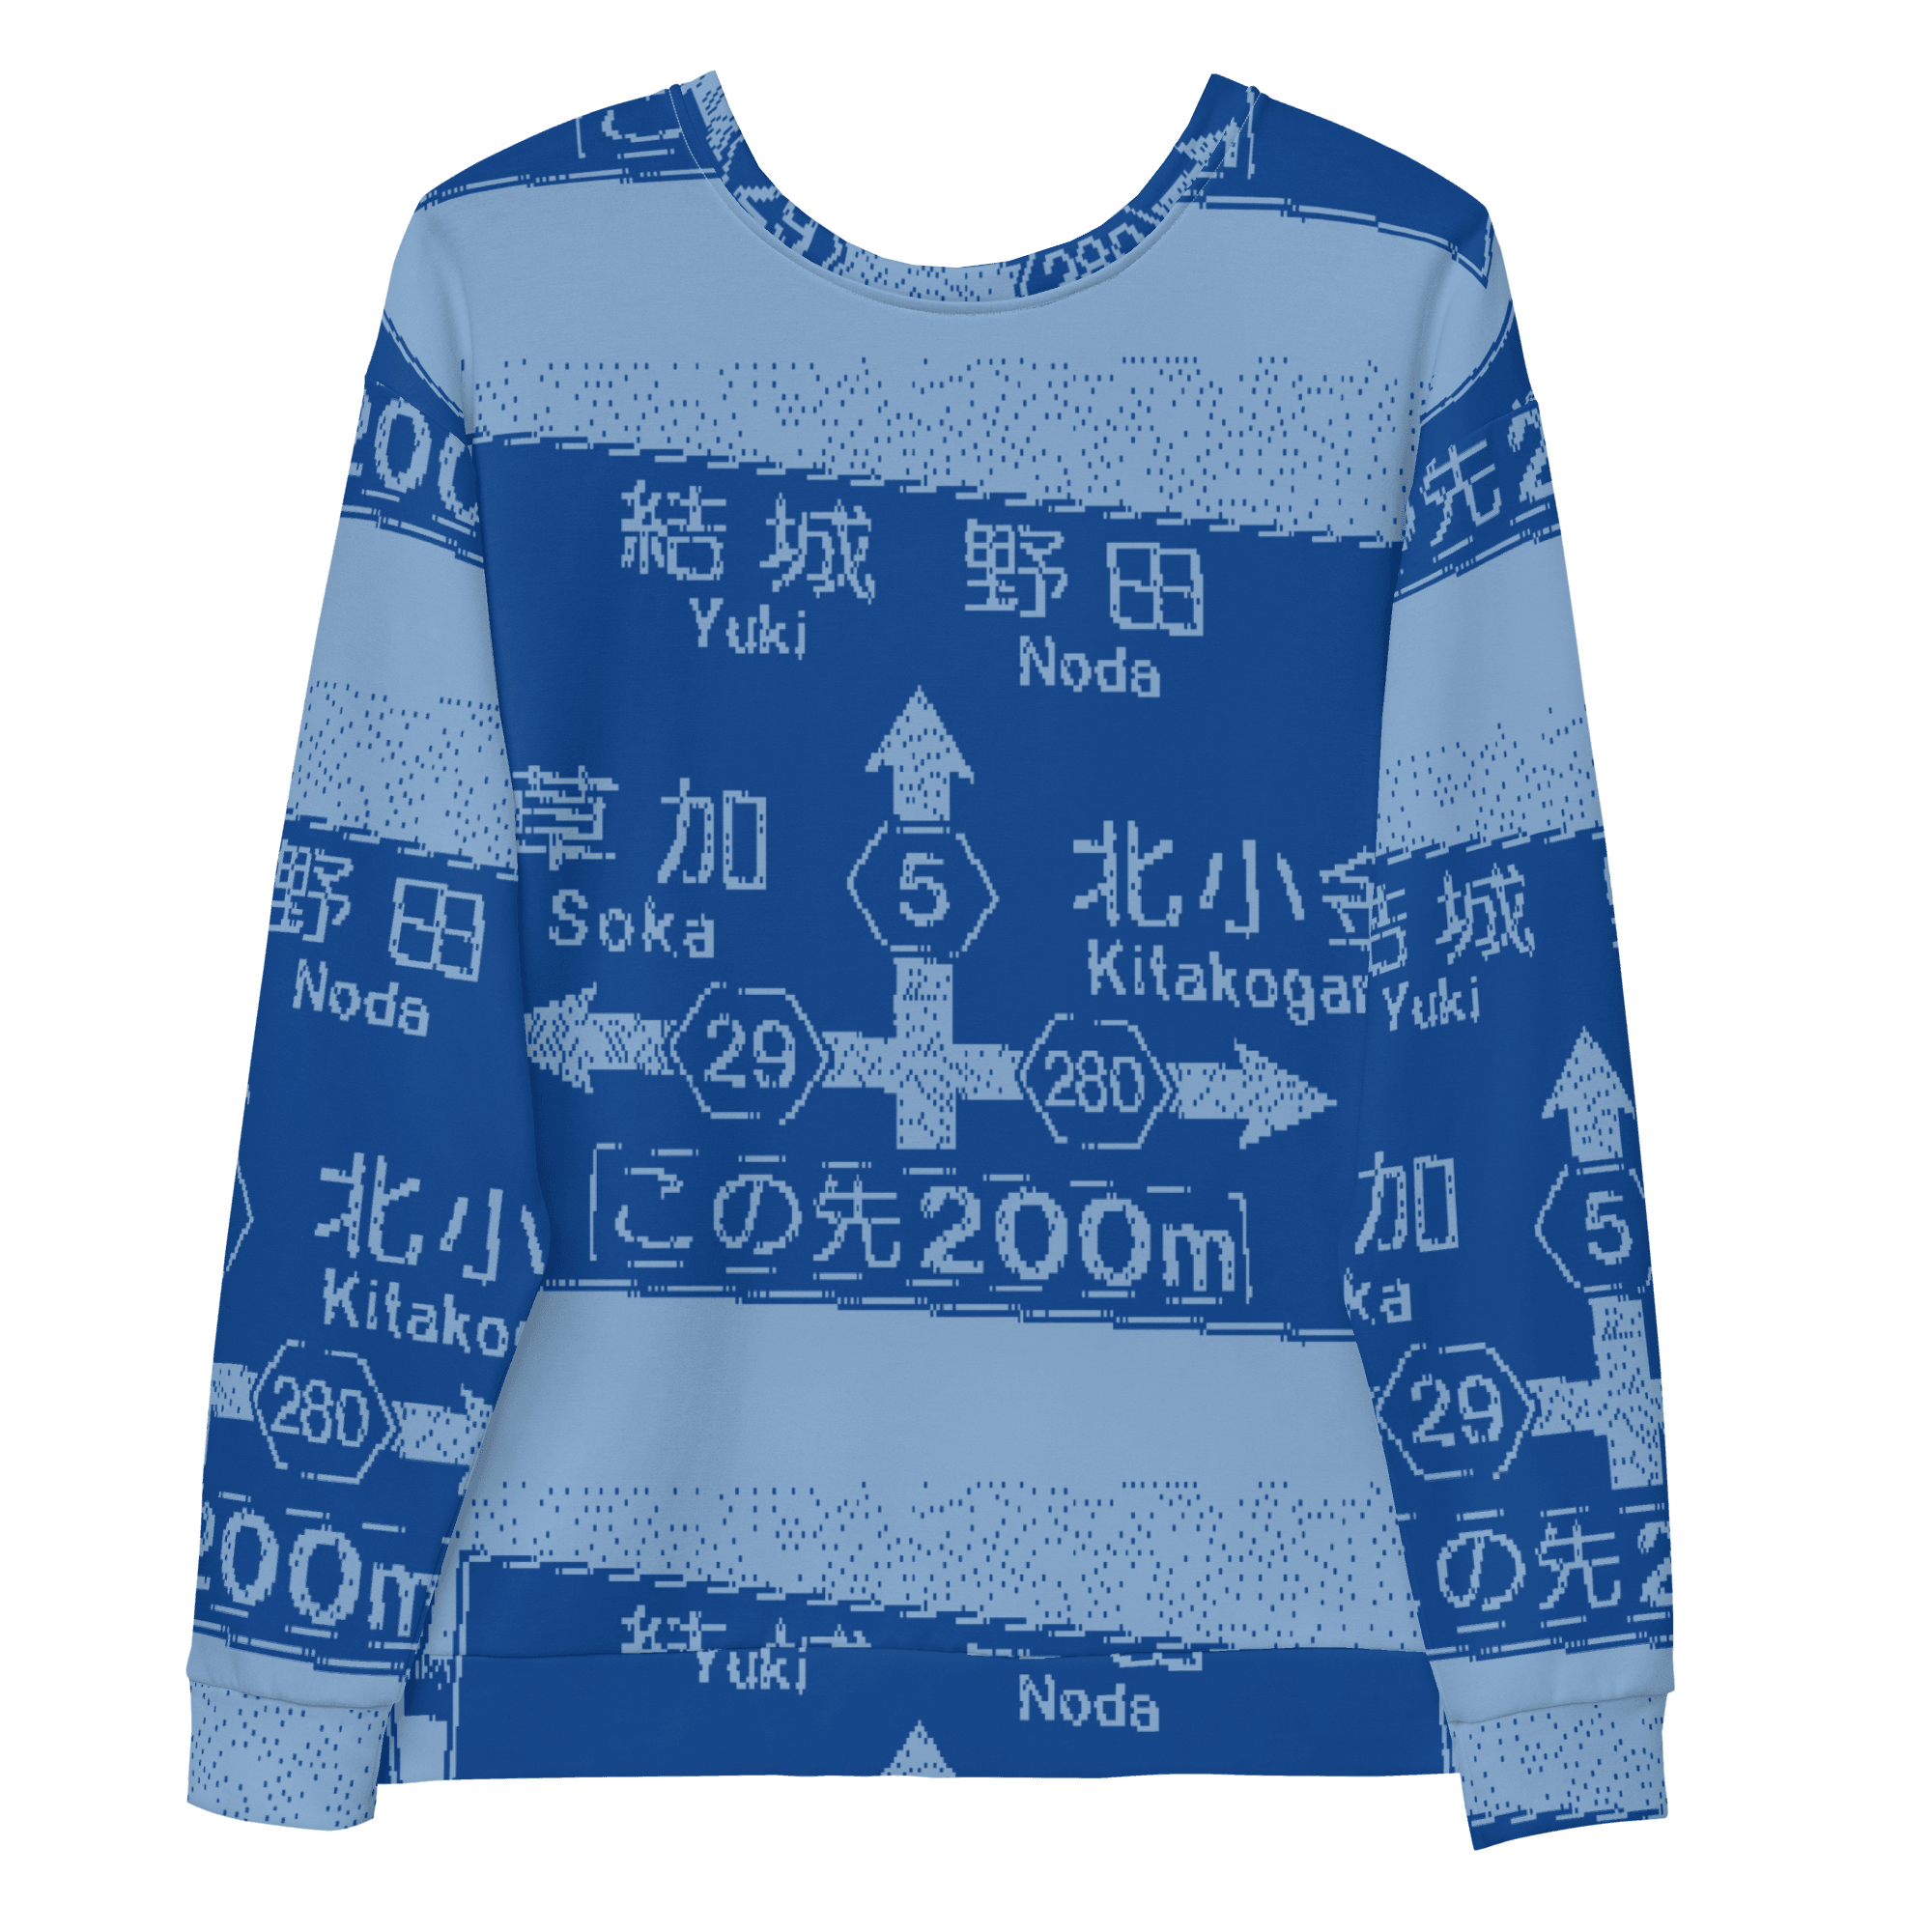 200m® Deluxe Sweatshirt (only 10 on sale) - Kikillo Club